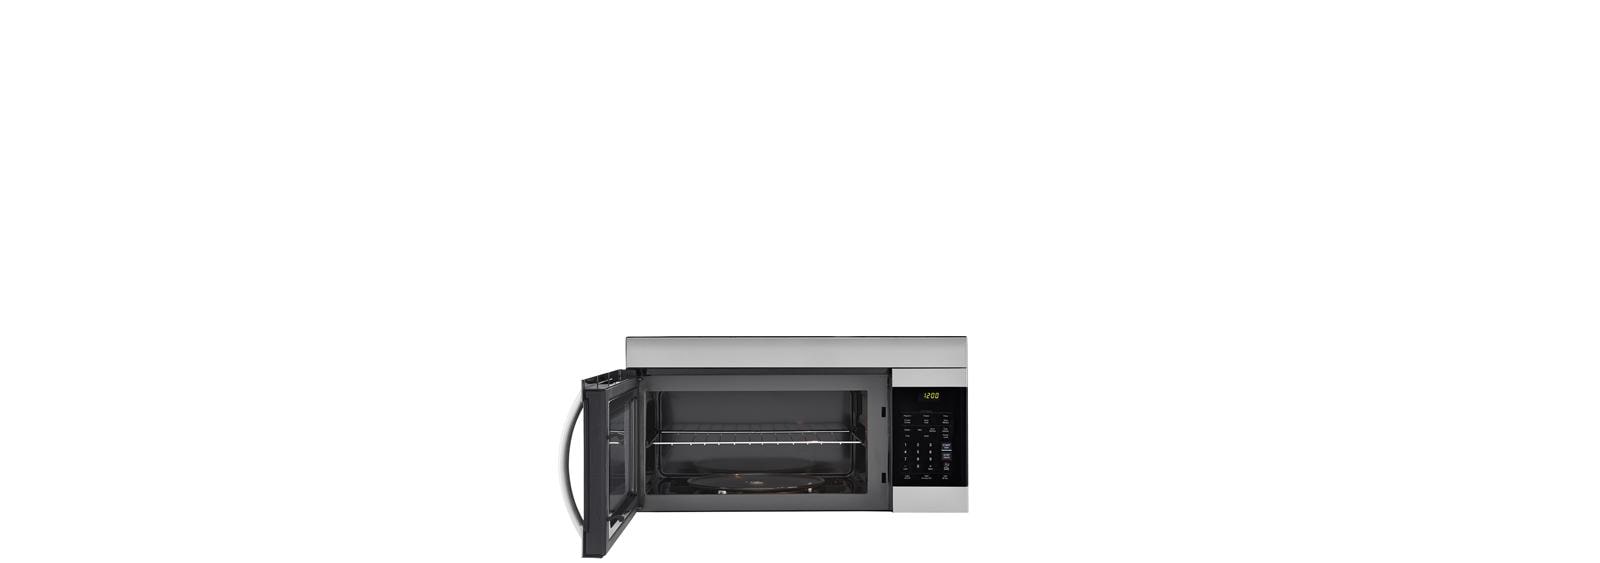 LG LMV1762ST: 1.7 cu.ft. Over-the-Range Microwave Oven | LG USA